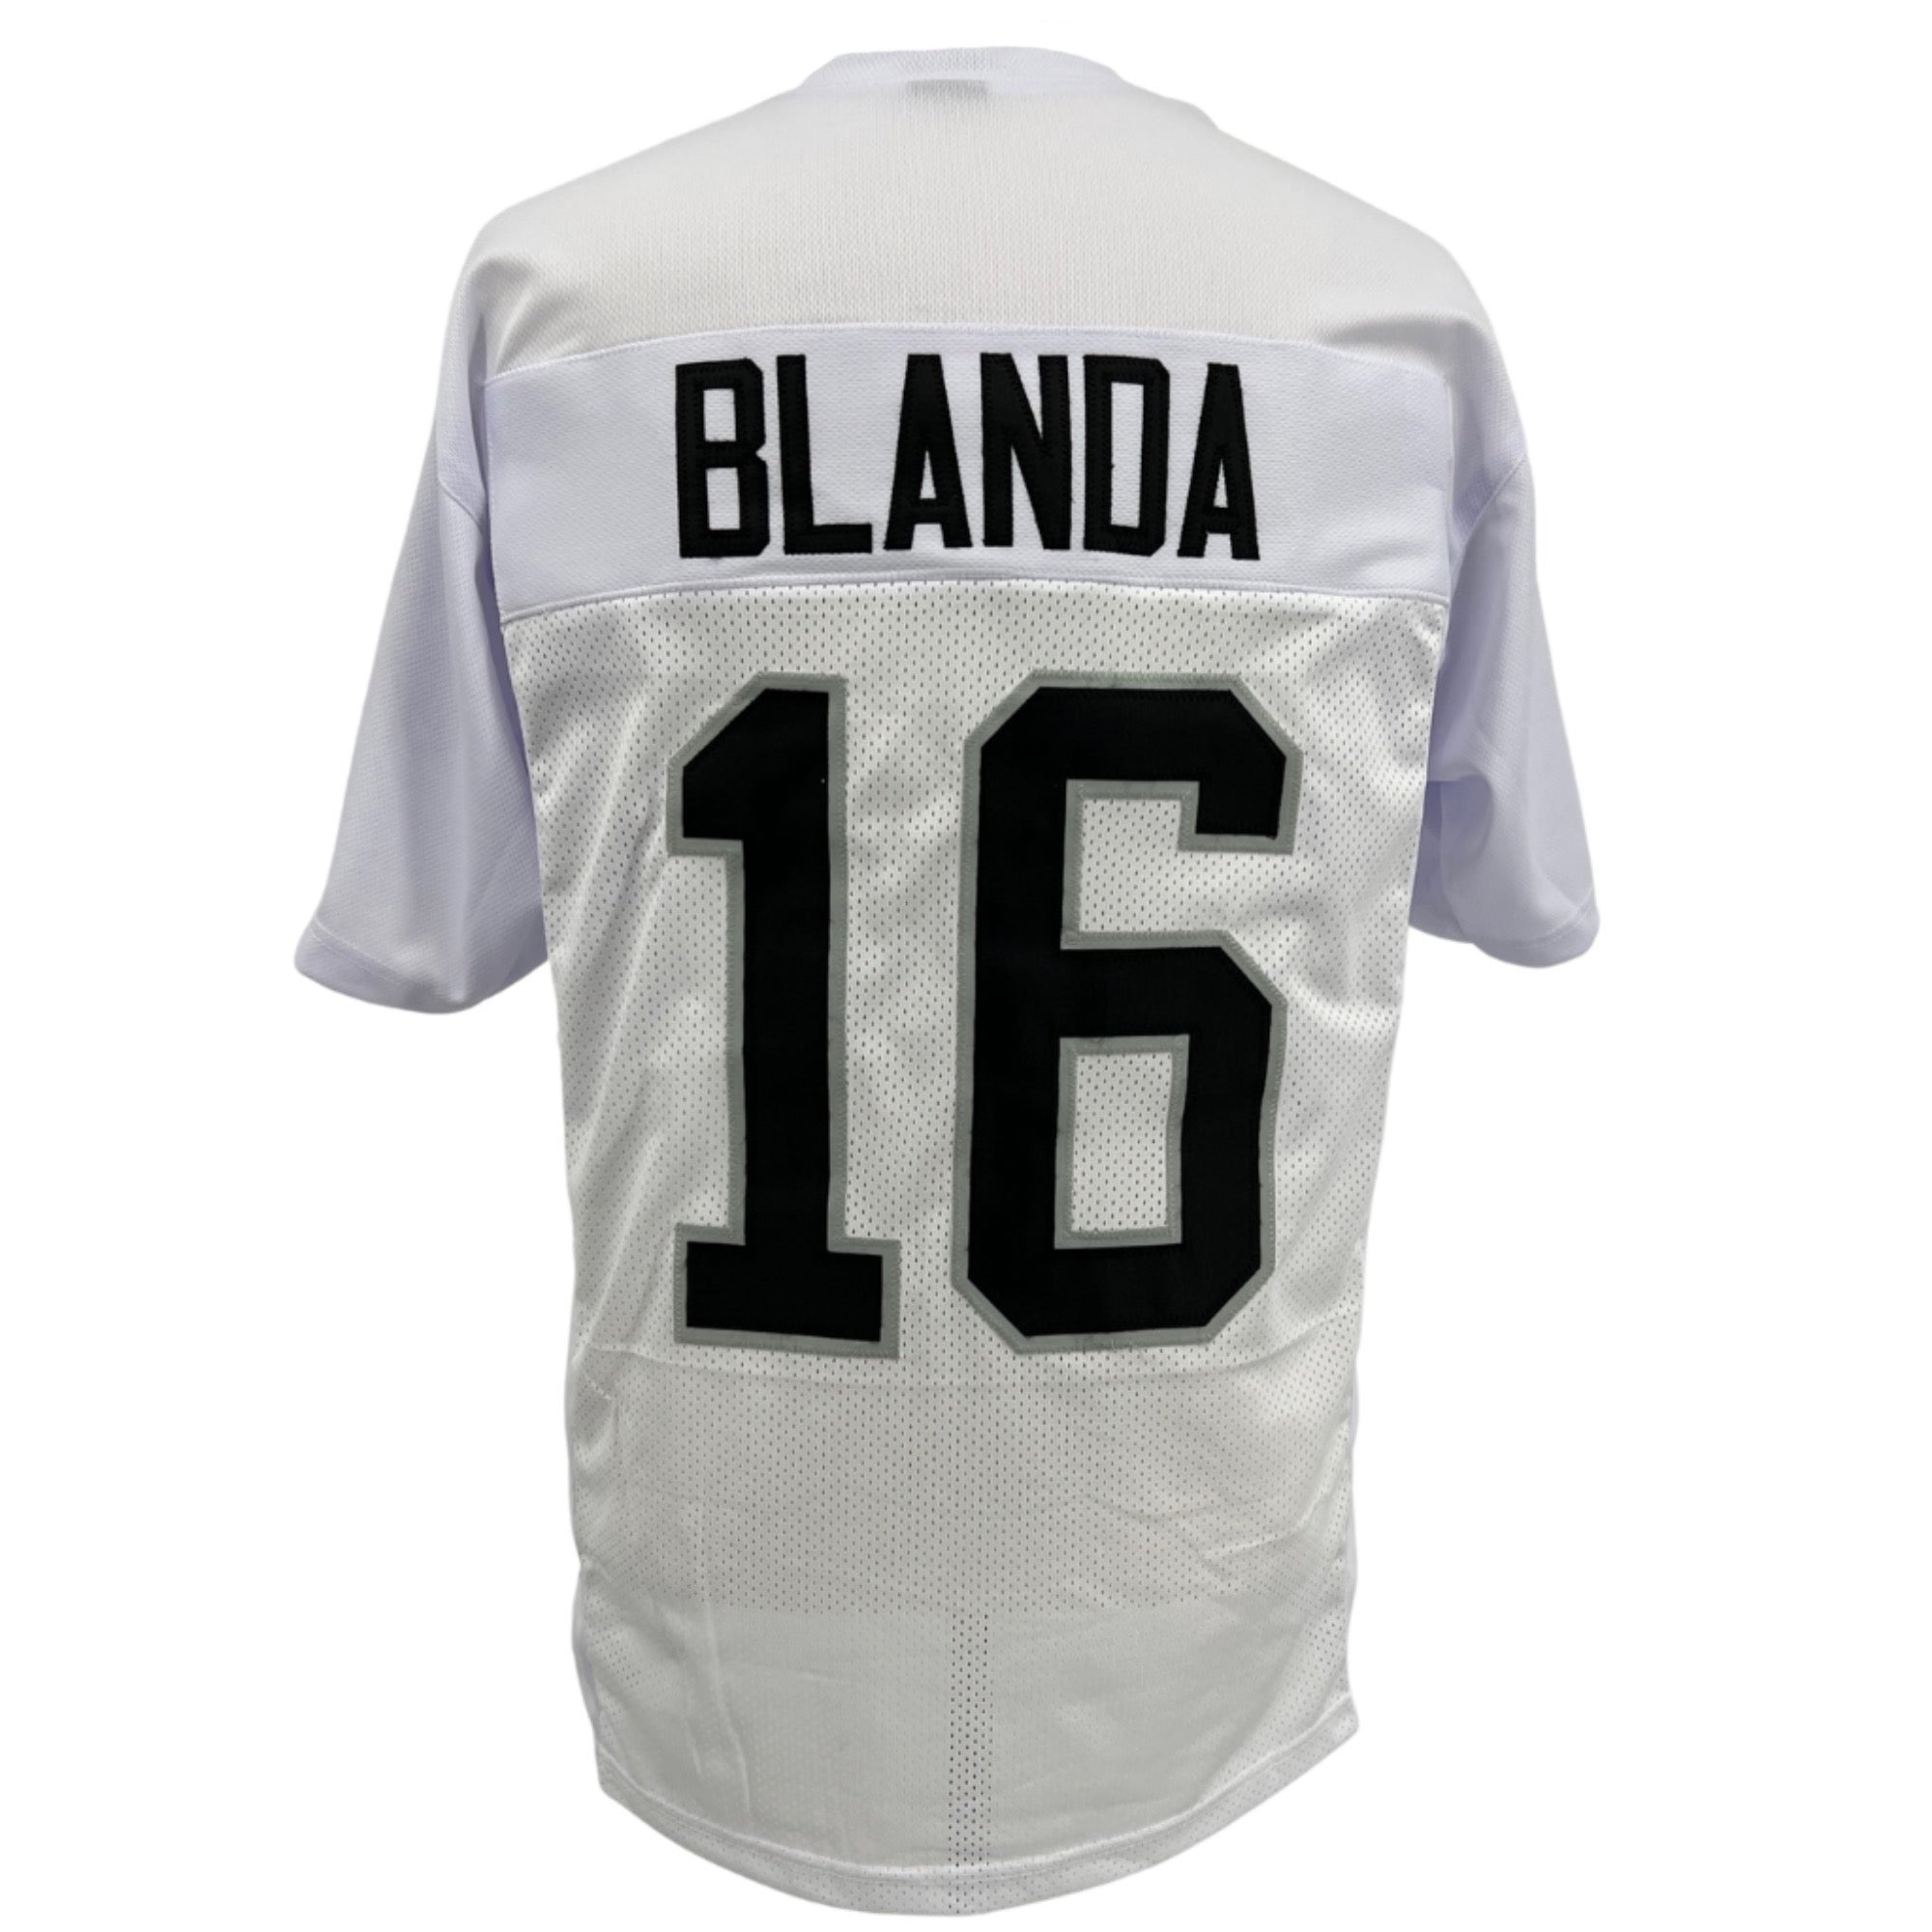 GEORGE BLANDA Oakland Raiders WHITE Jersey B/SL M-5XL Unsigned Sewn Stitch